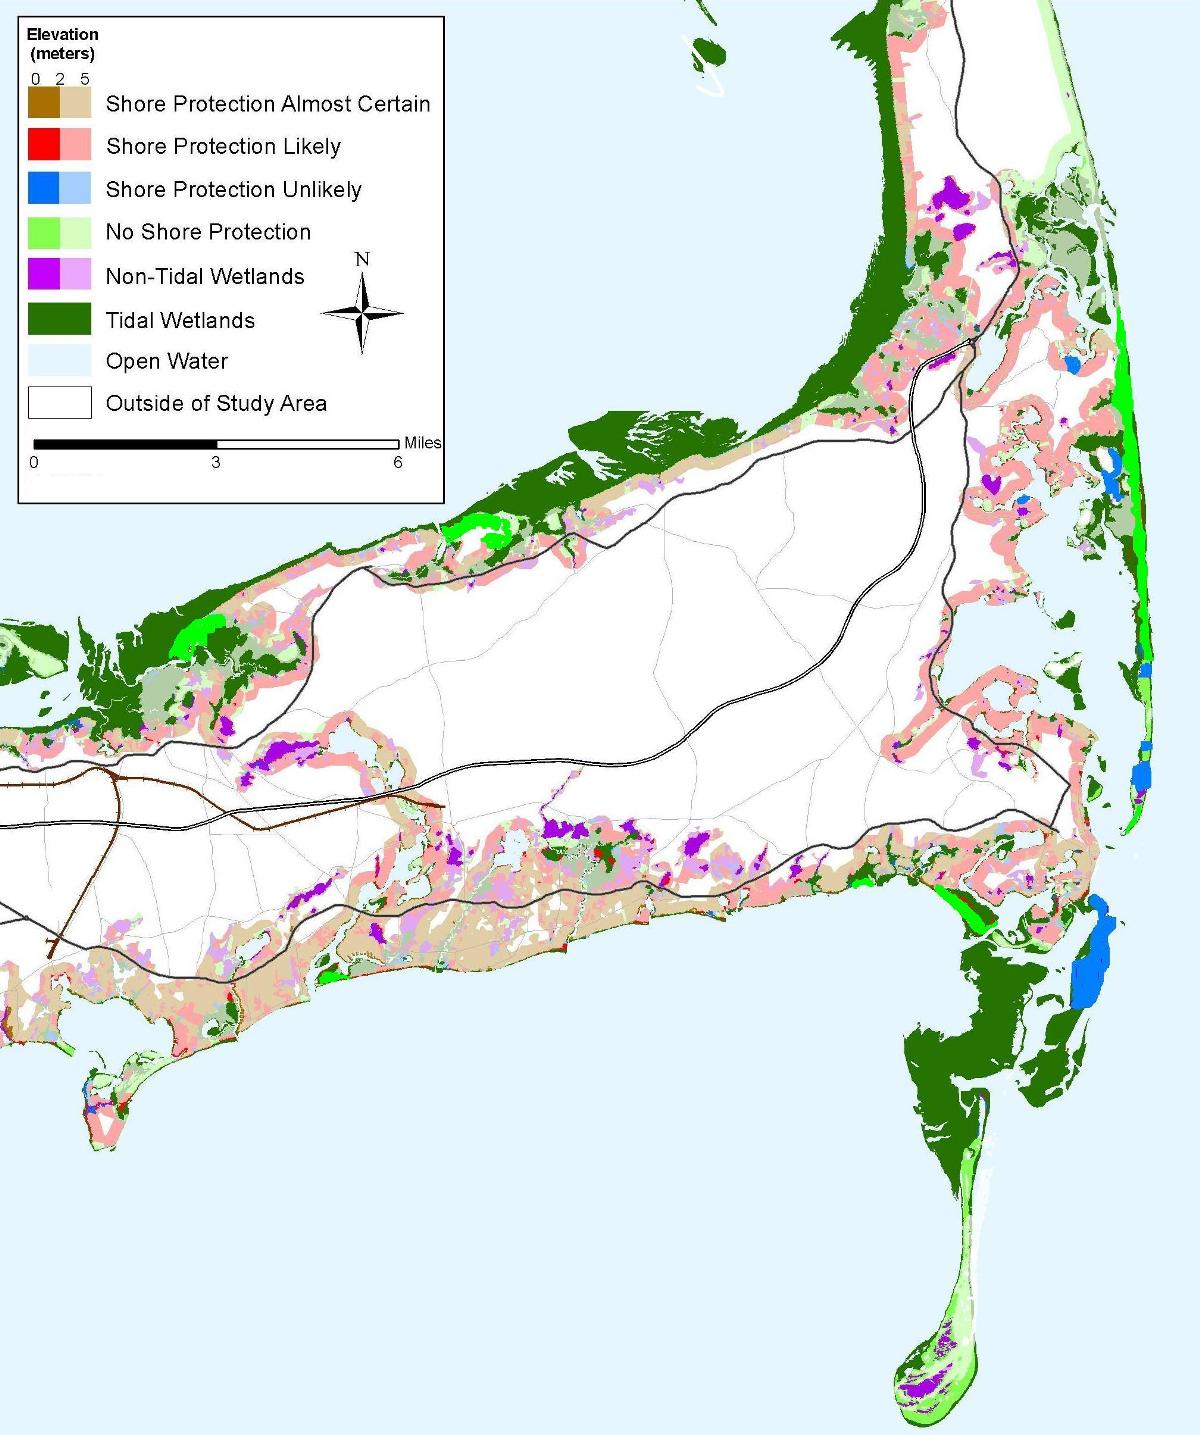  Southeastern Cape Cod sea level rise planning map